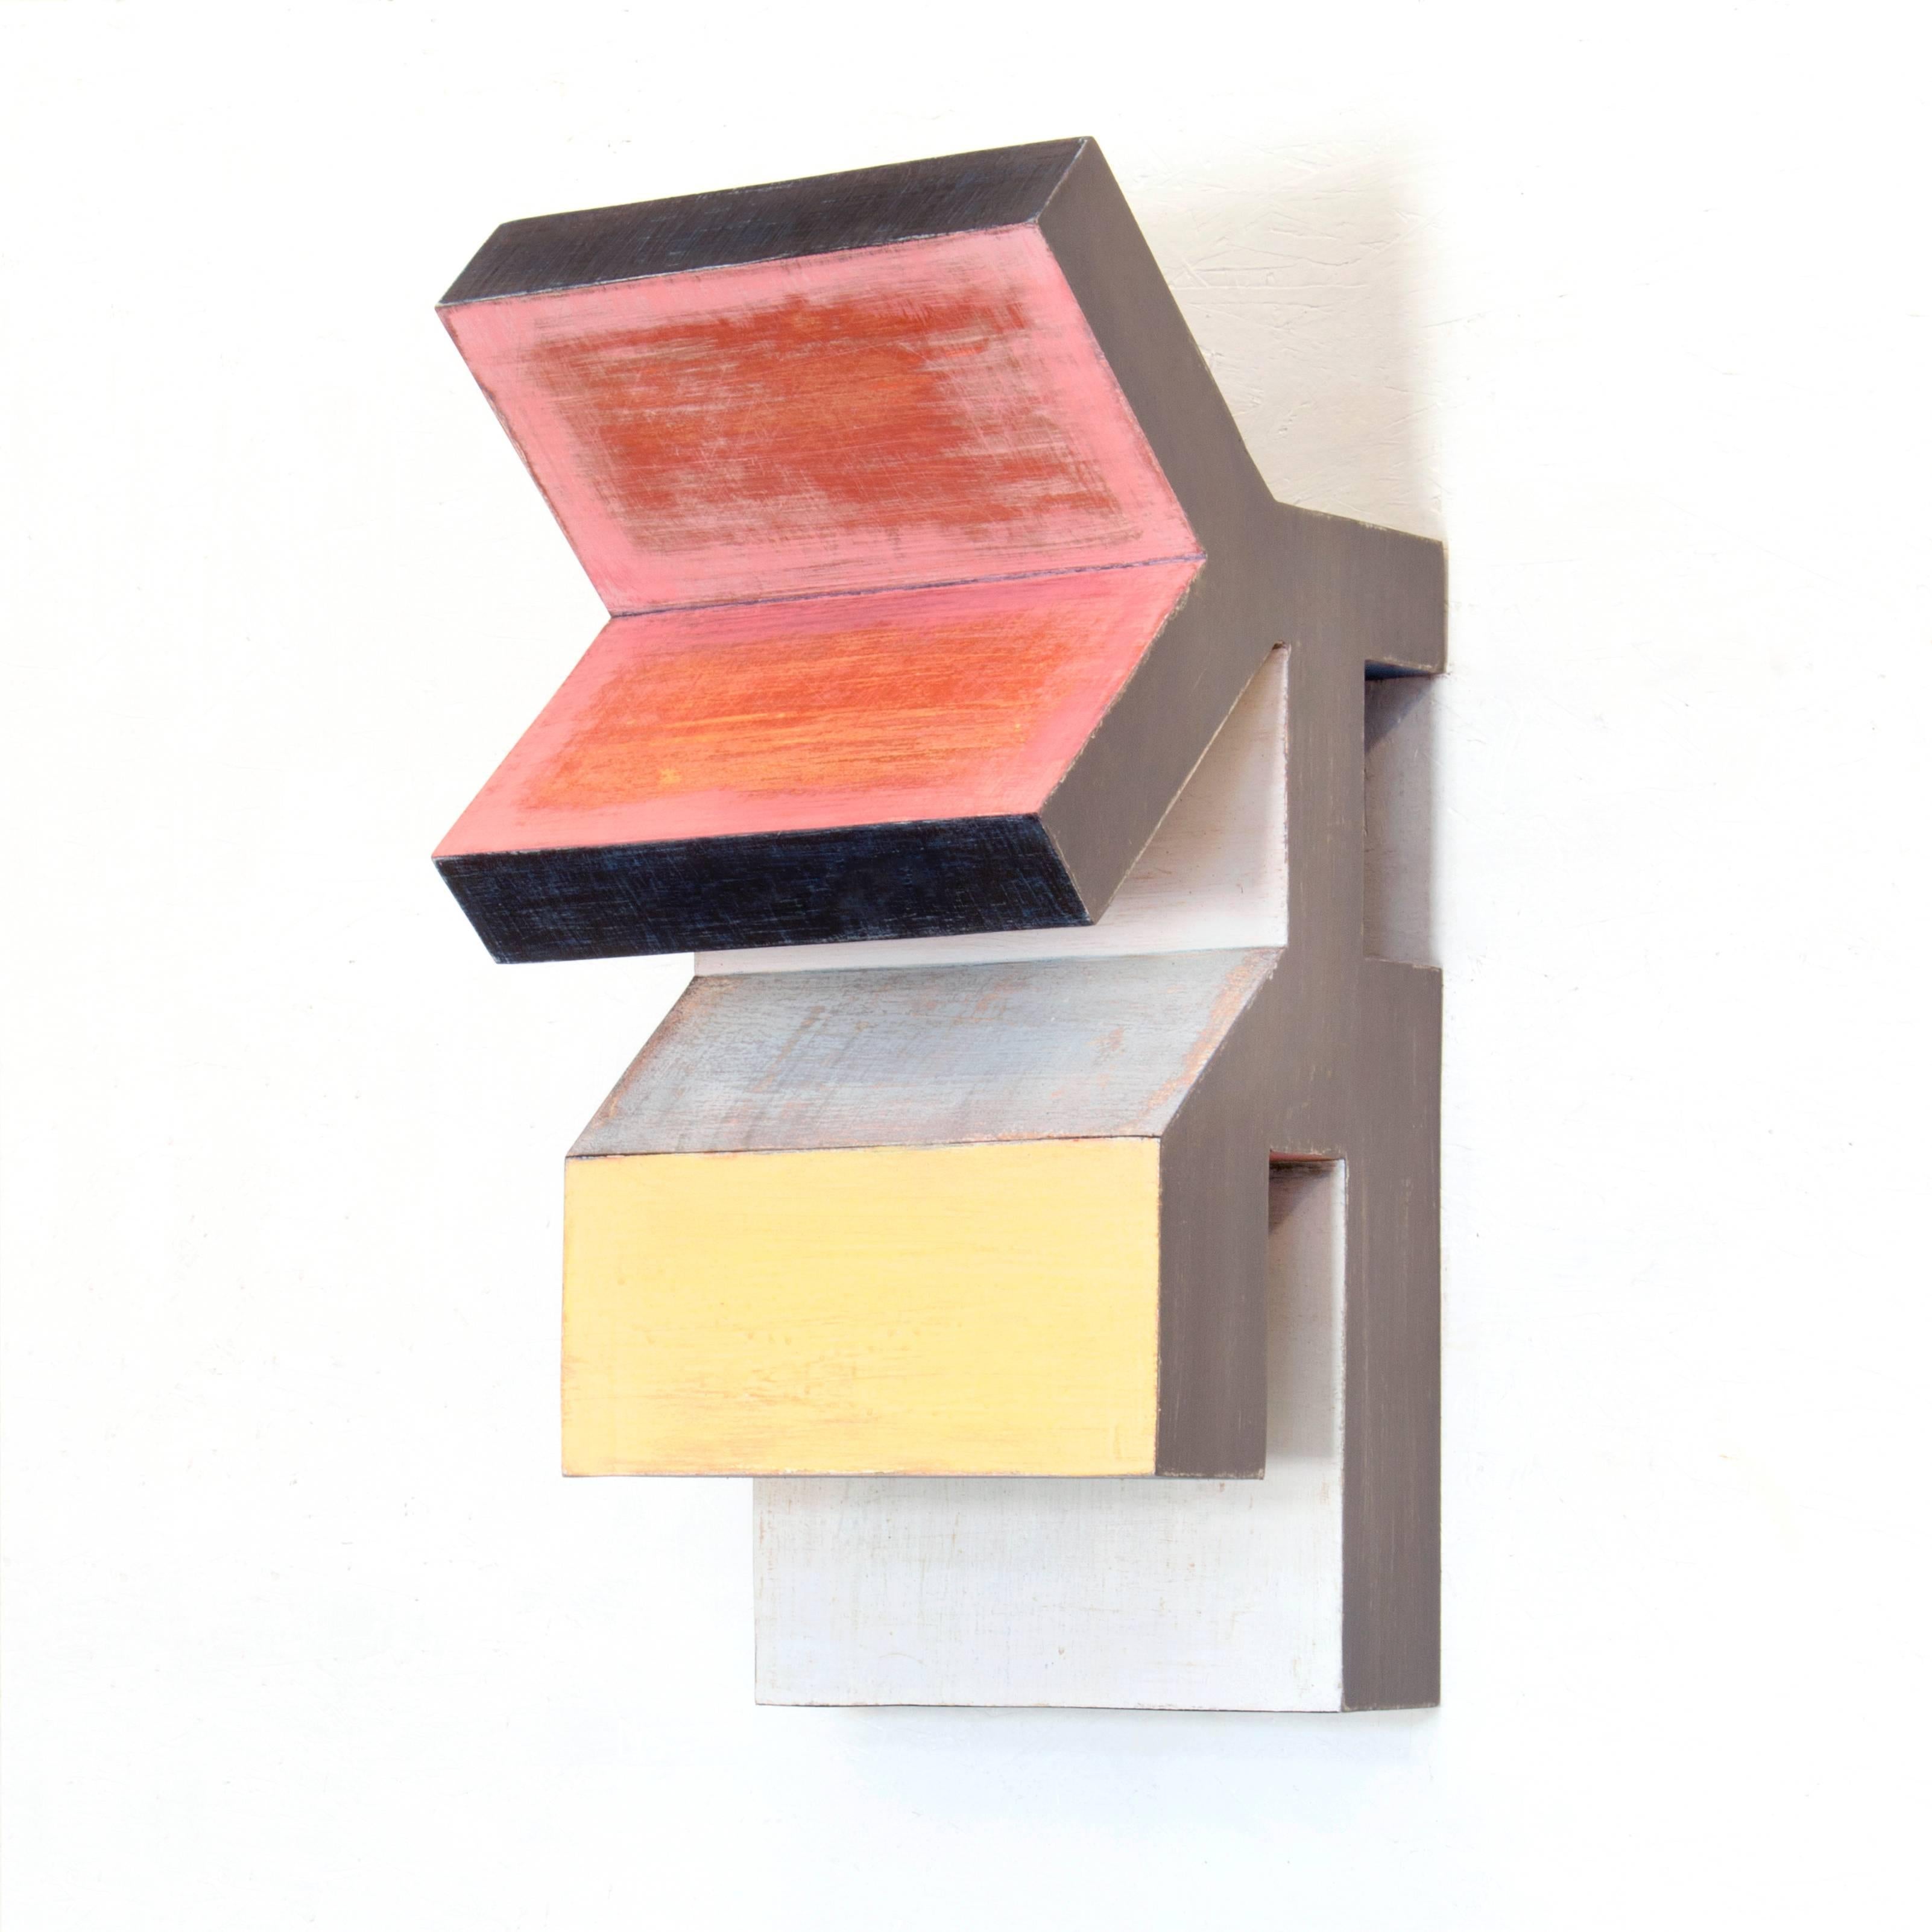 Sarah Tortora Abstract Sculpture - "Orator" - Abstract Wooden Wall Sculpture